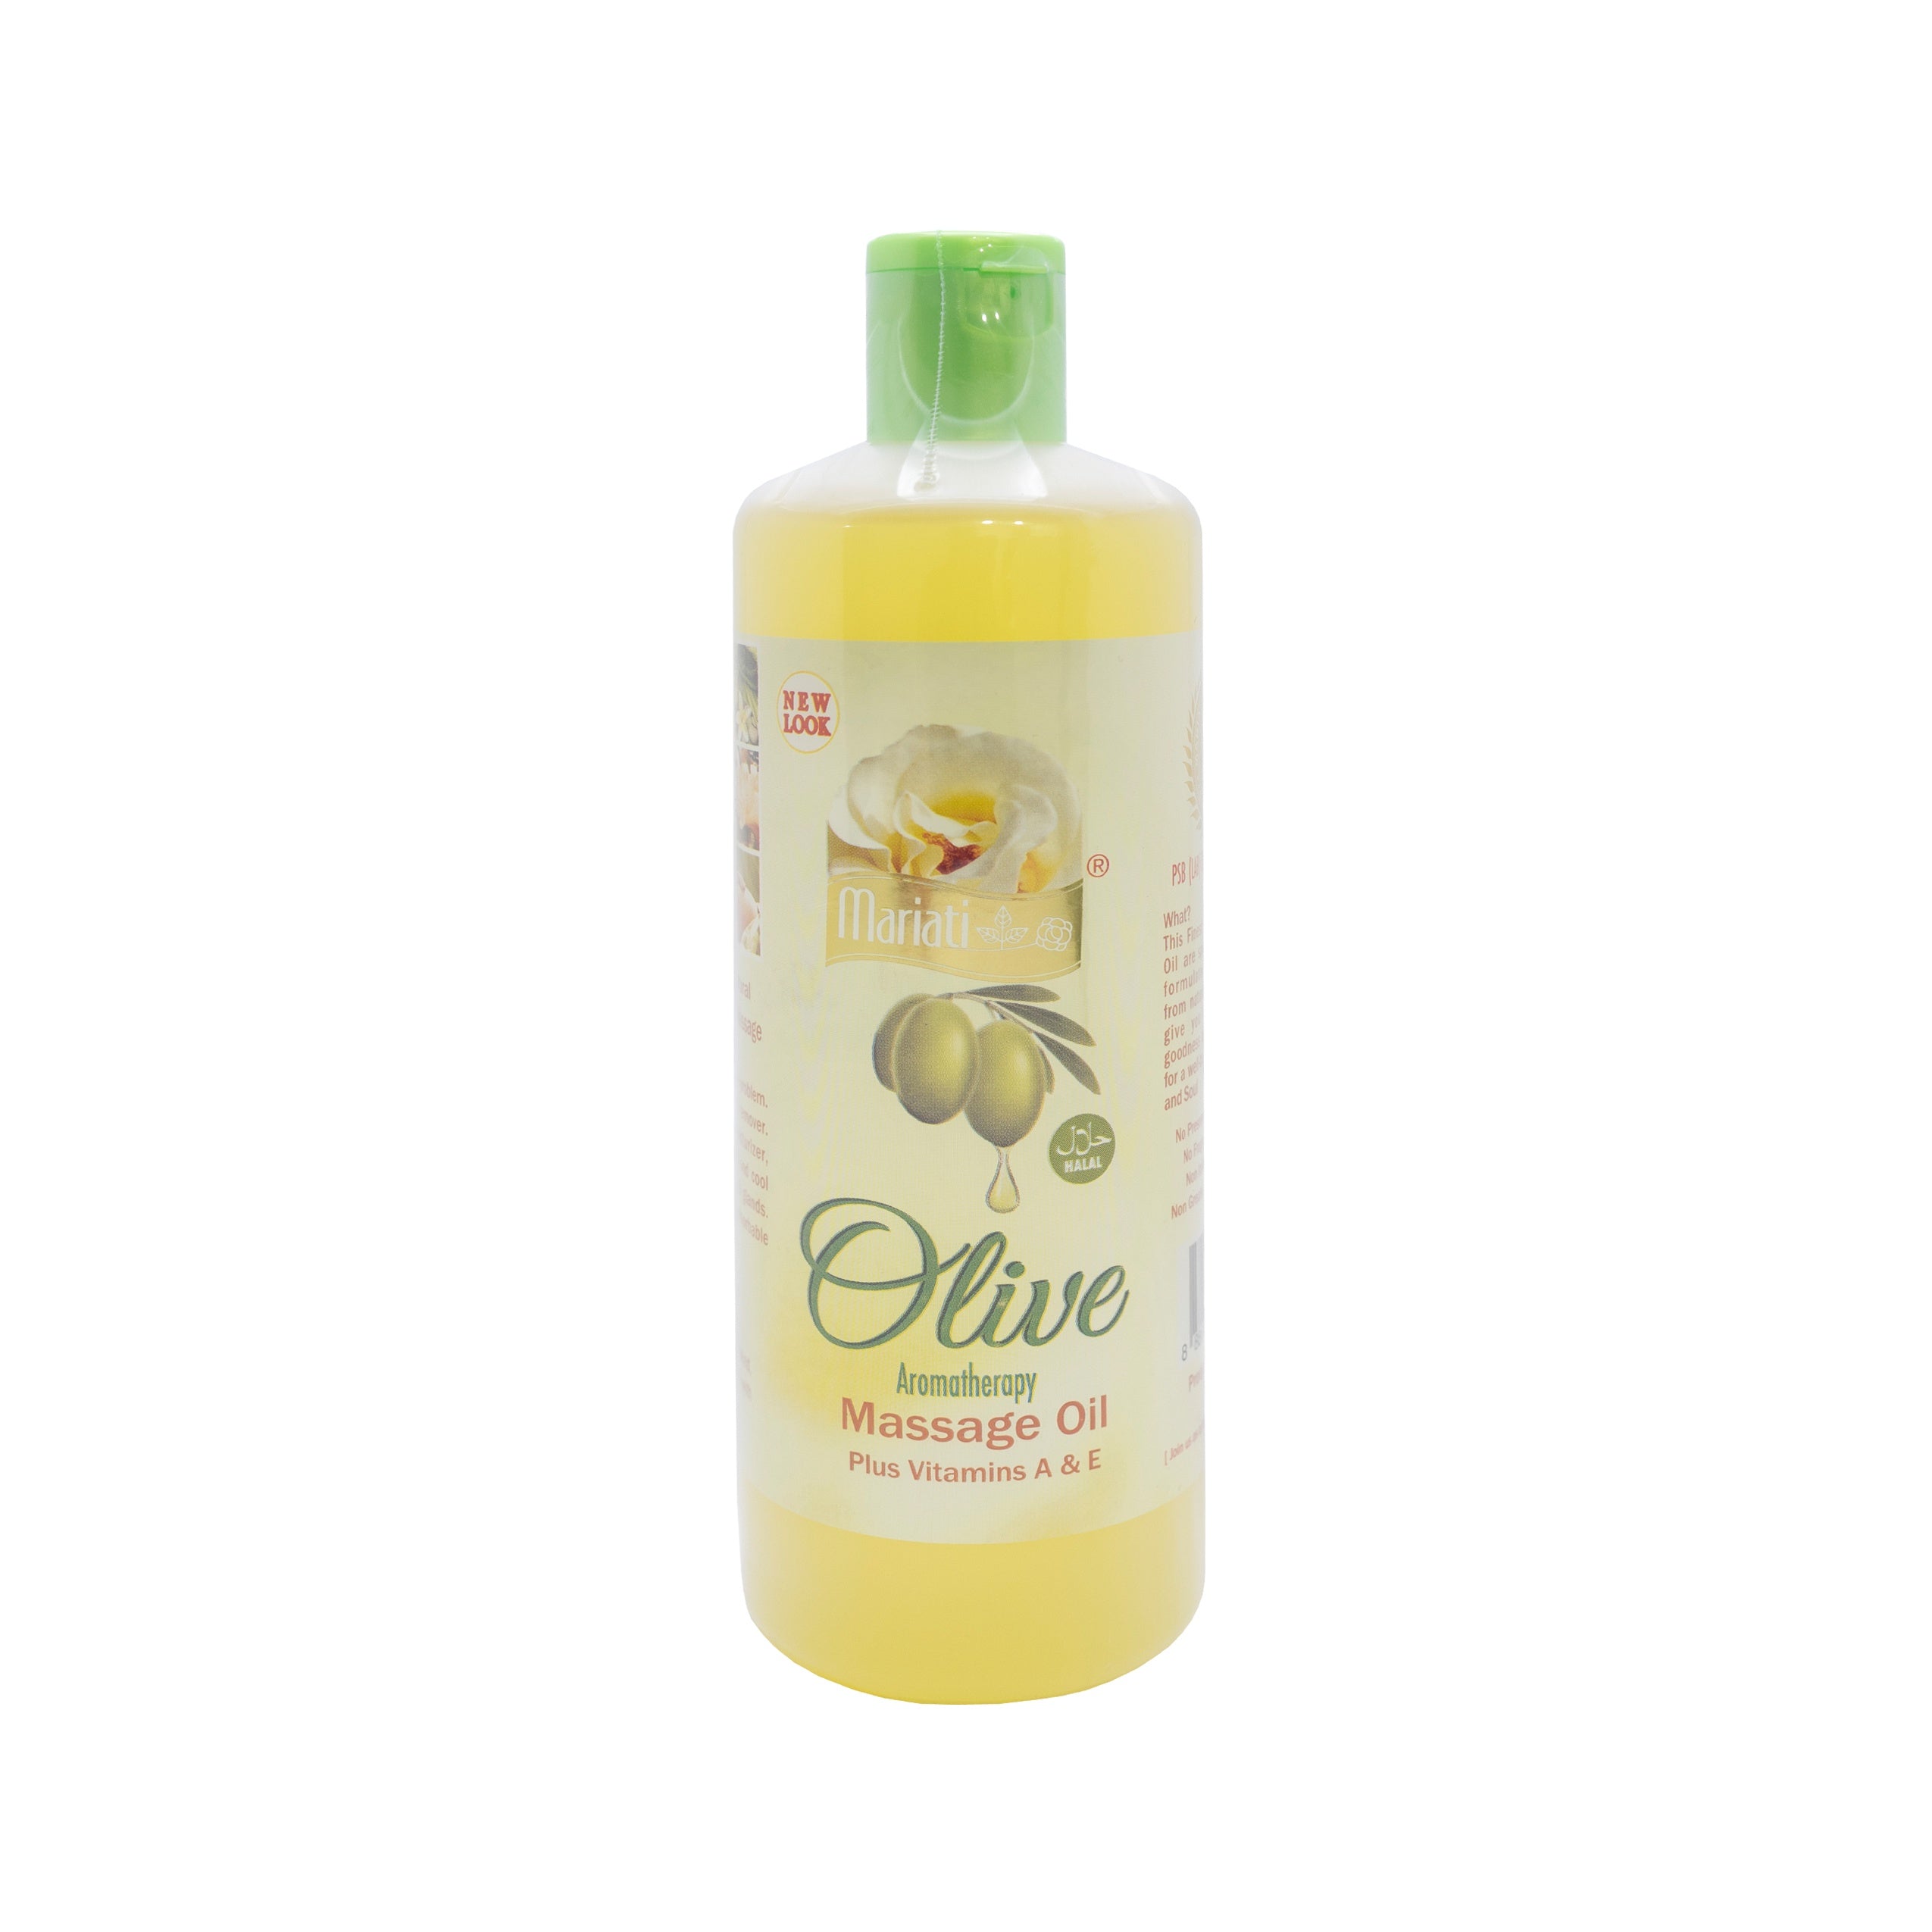 Mariati Aromatherapy Plus Vitamins A & E Olive Massage Oil 500ml